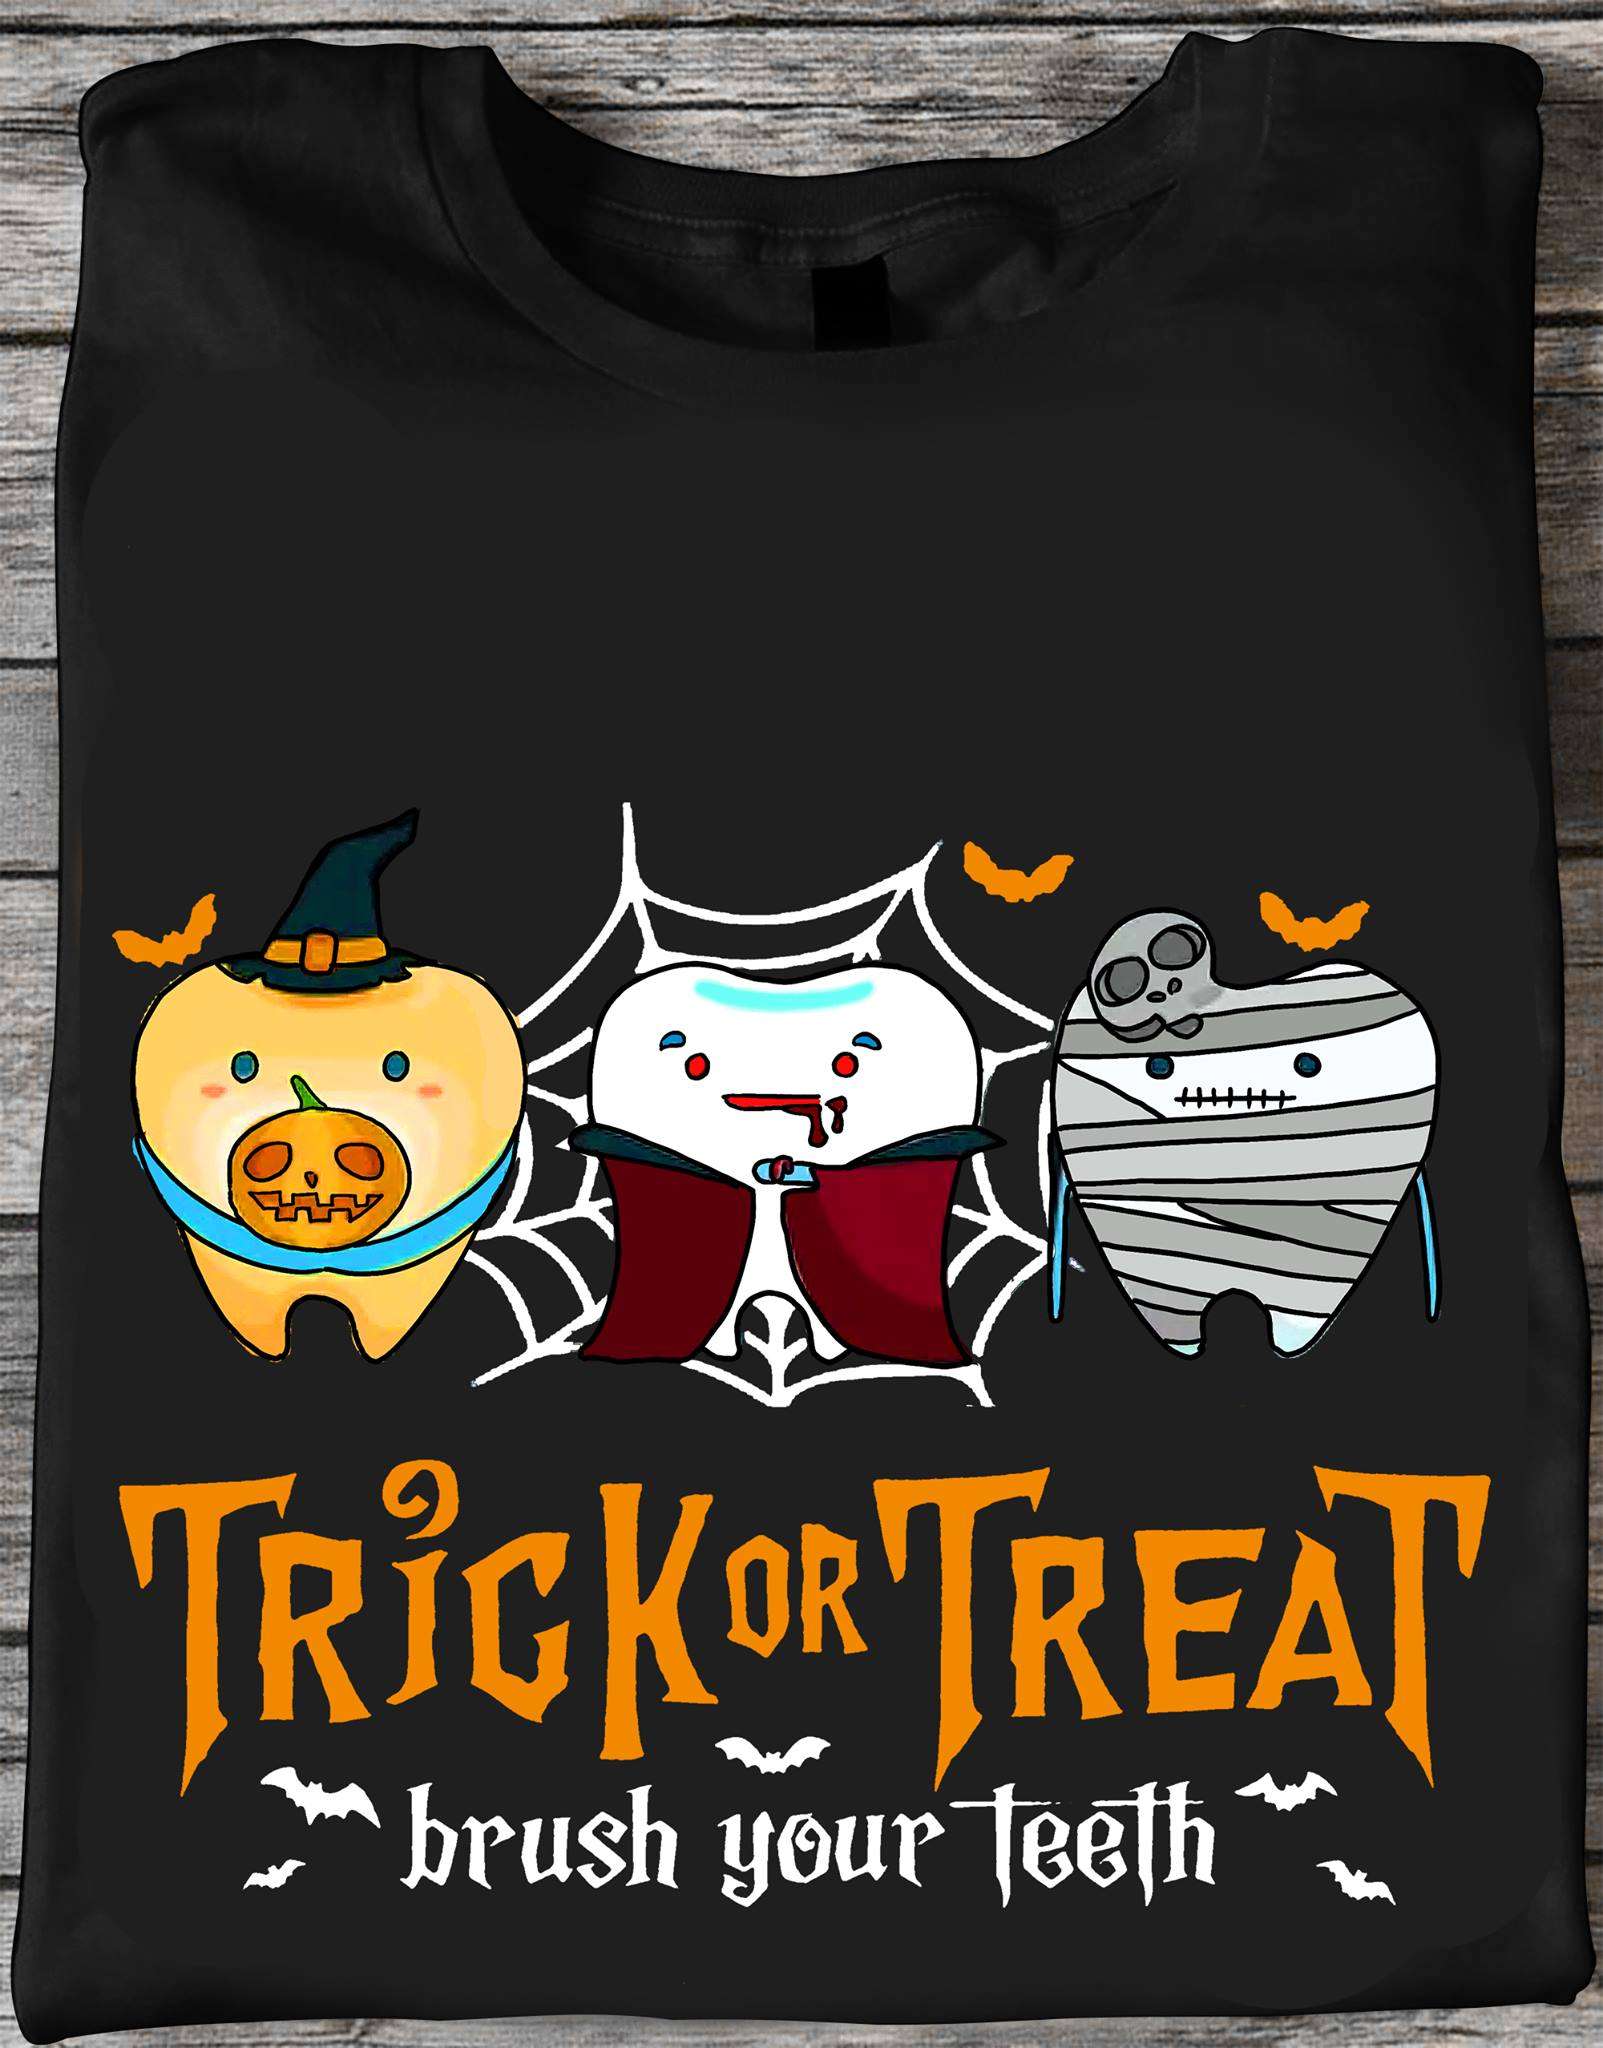 Trick or treat, brush your teeth - Teeth halloween costume